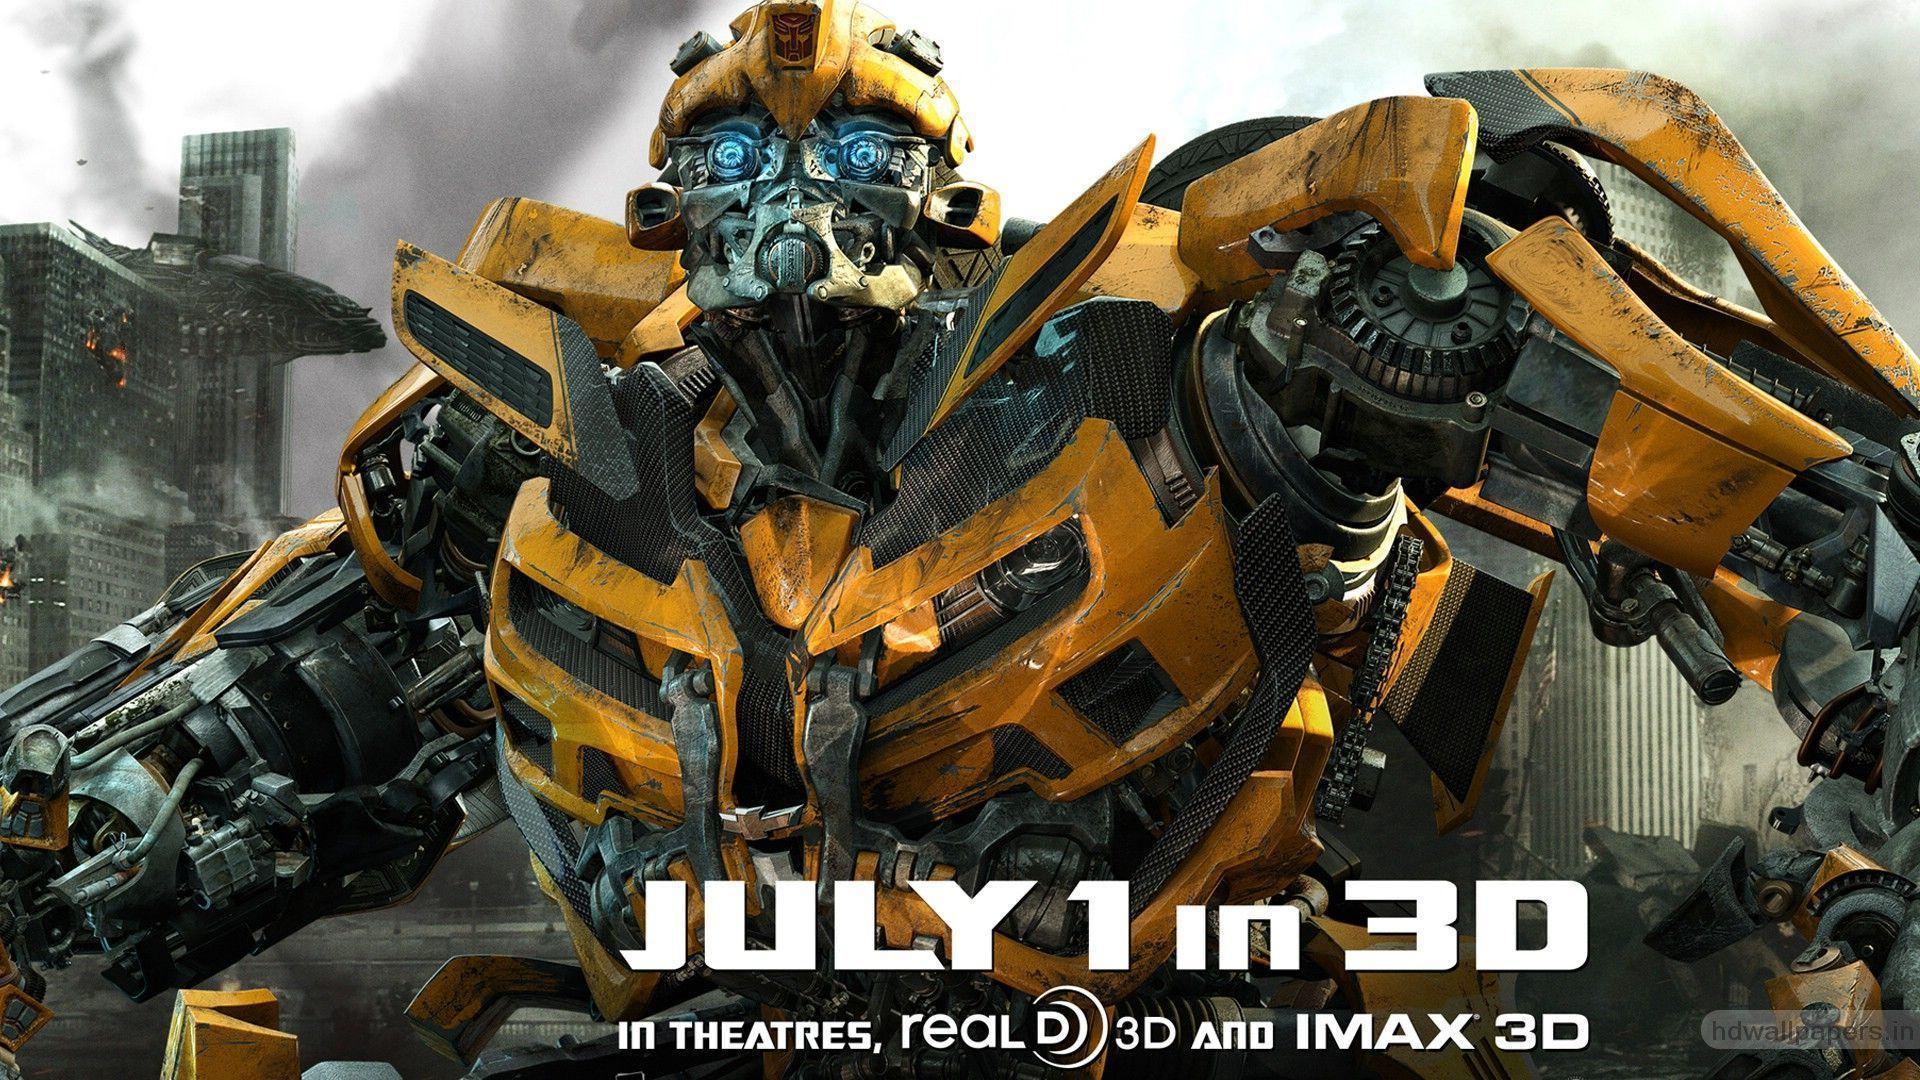 Bumblebee in New Transformers 3 Wallpaper